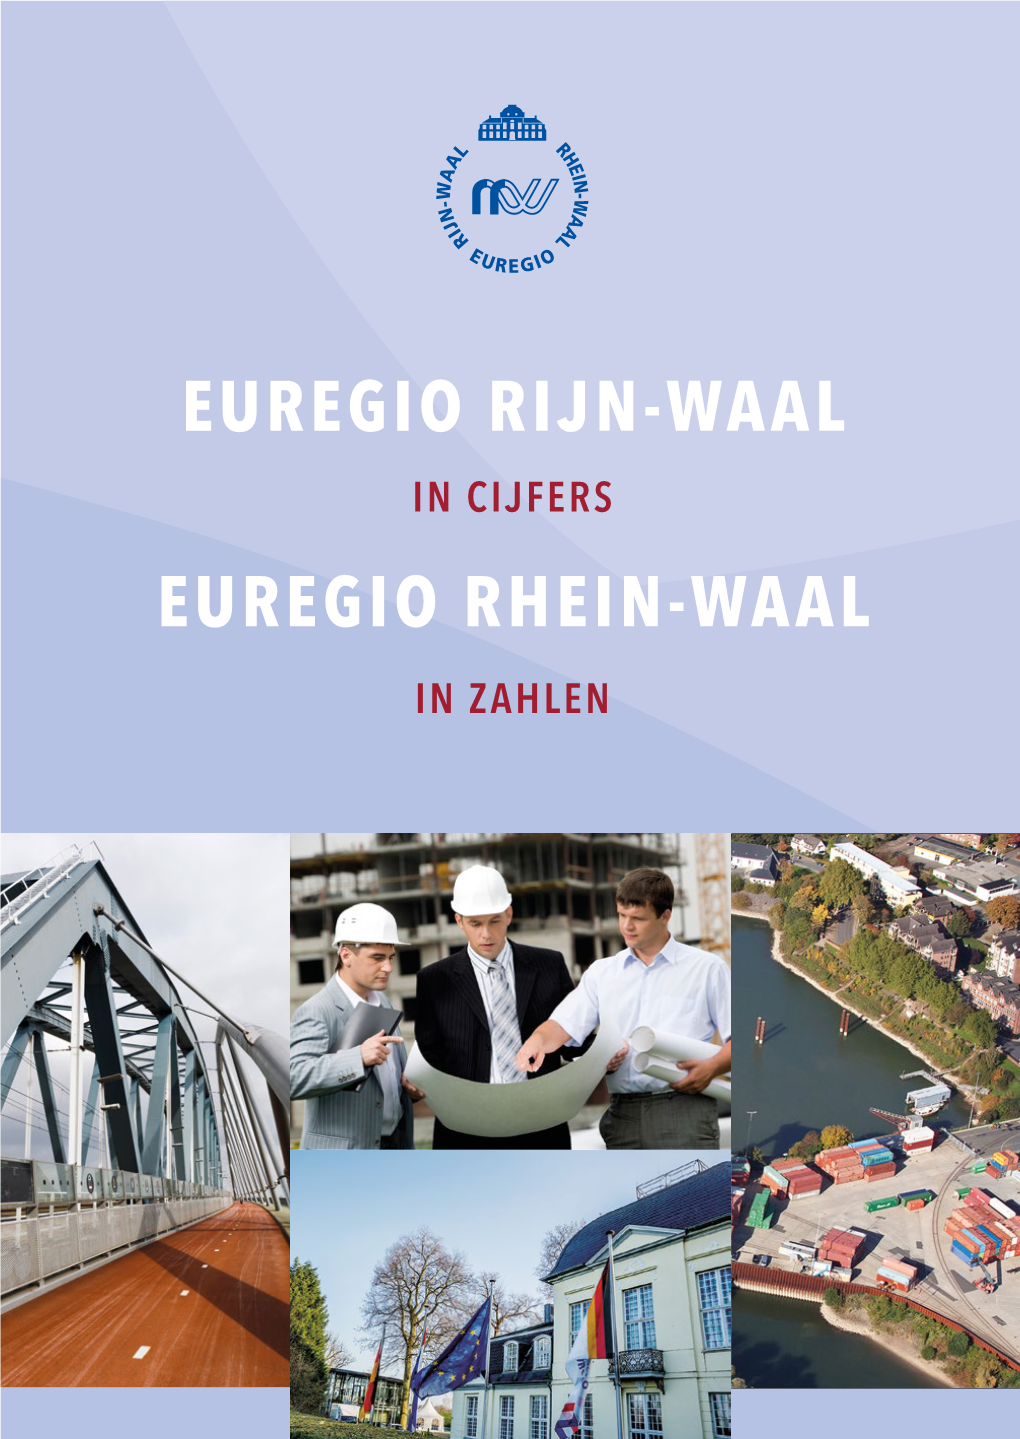 Euregio Rhein-Waal